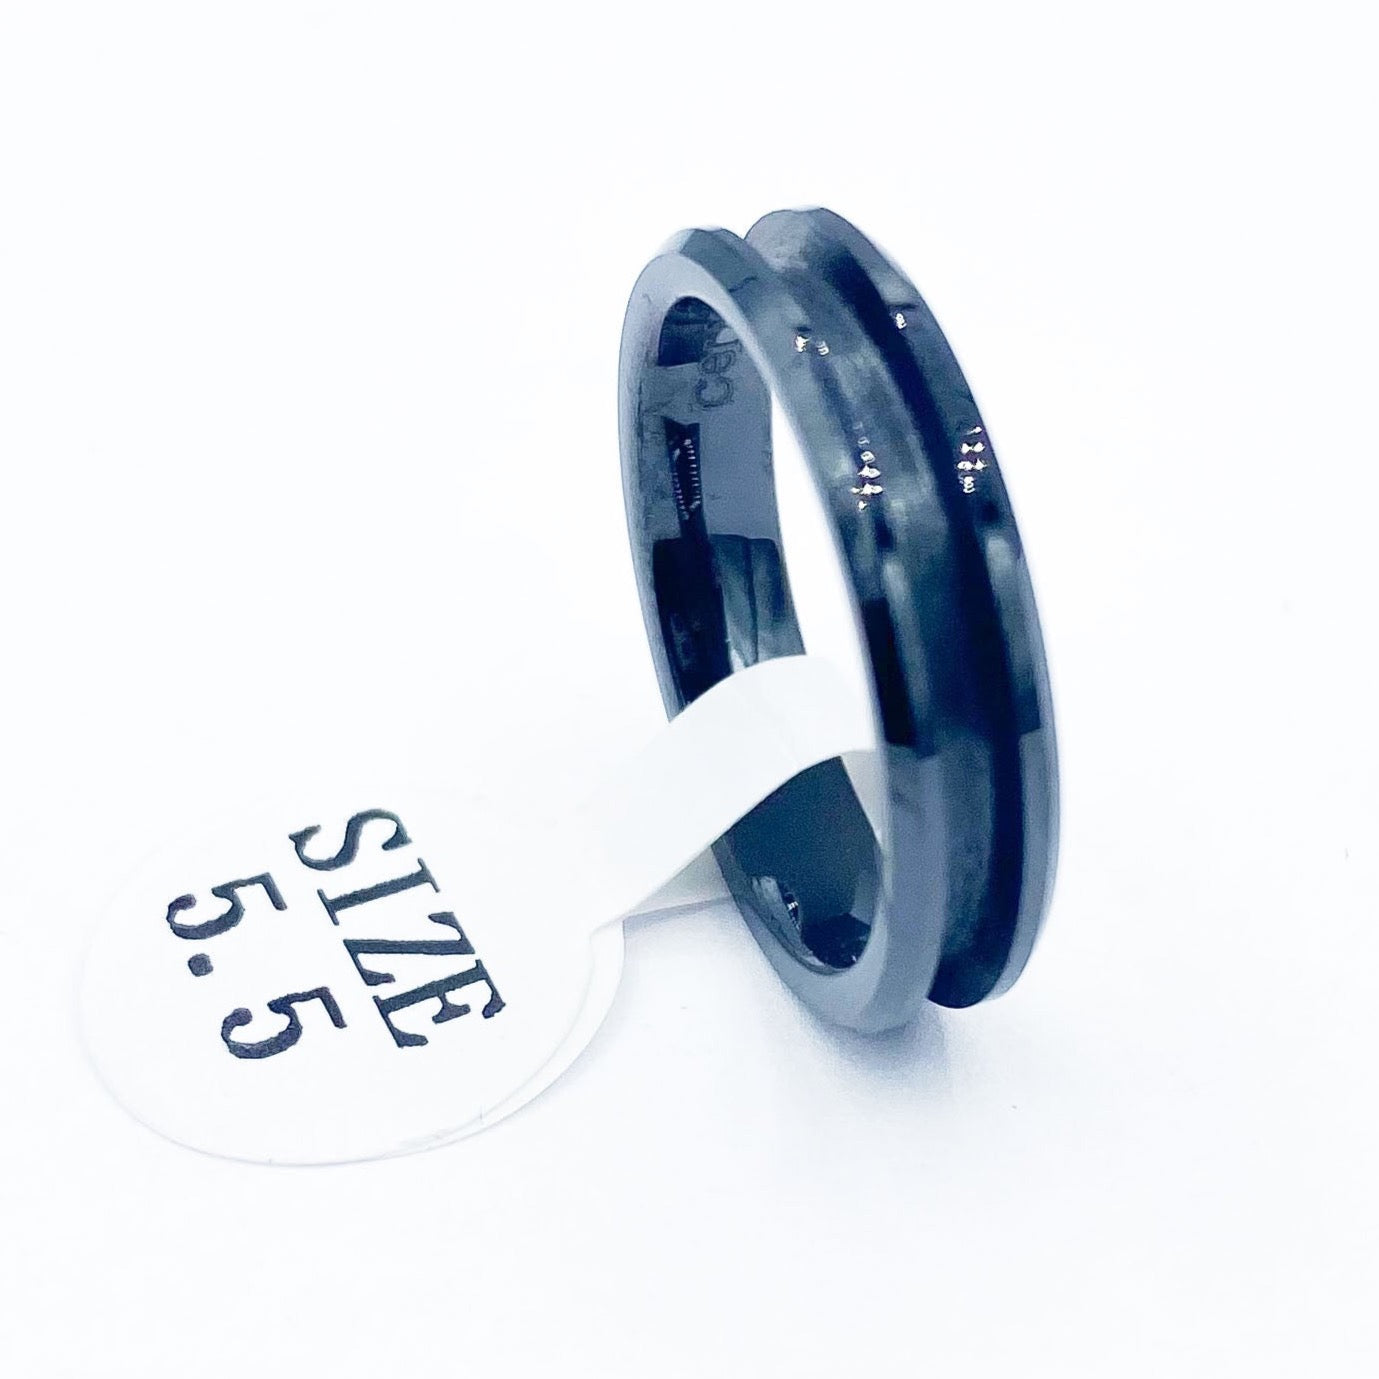 Black Ceramic Ring Blank | Ring Blanks | Ring Blanks for Inlay – Patrick  Adair Supplies